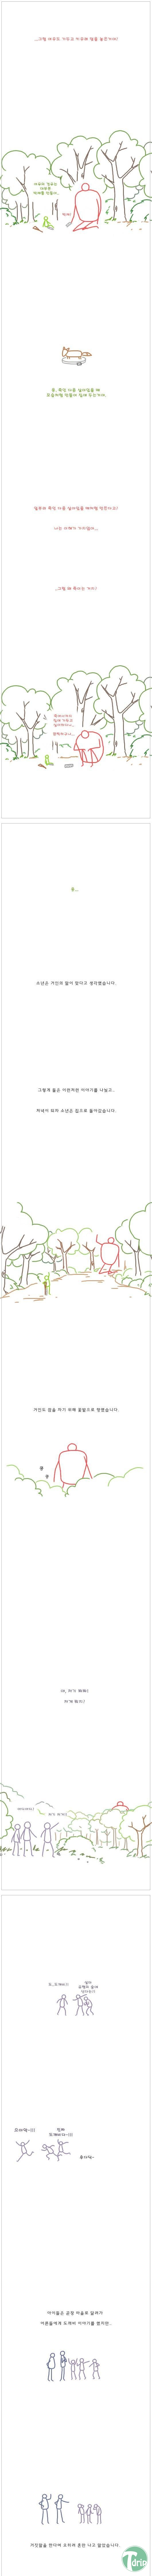 11.jpg : 녹색소년과 붉은거인 (개스압)